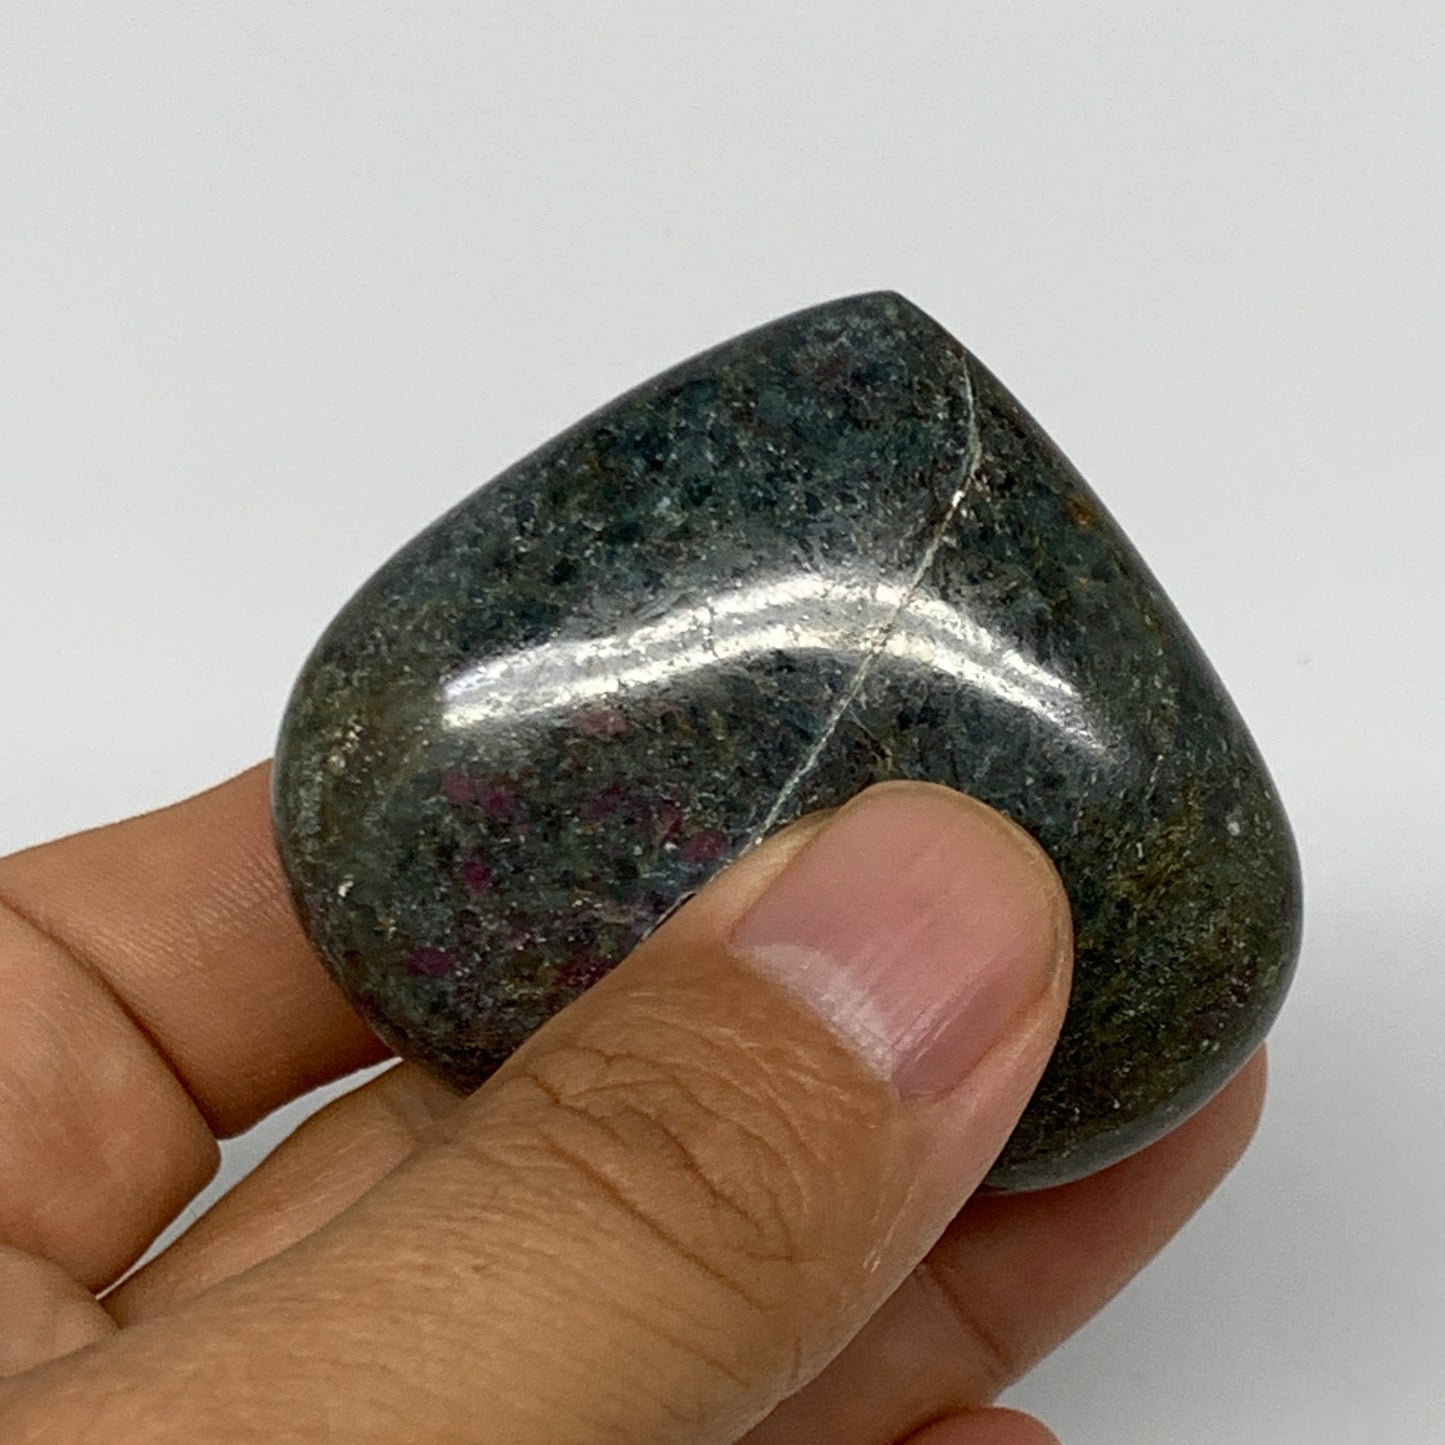 99.6g, 1.8"x2.1"x0.9", Ruby Kyanite Heart Small Polished Healing Crystal, B22067